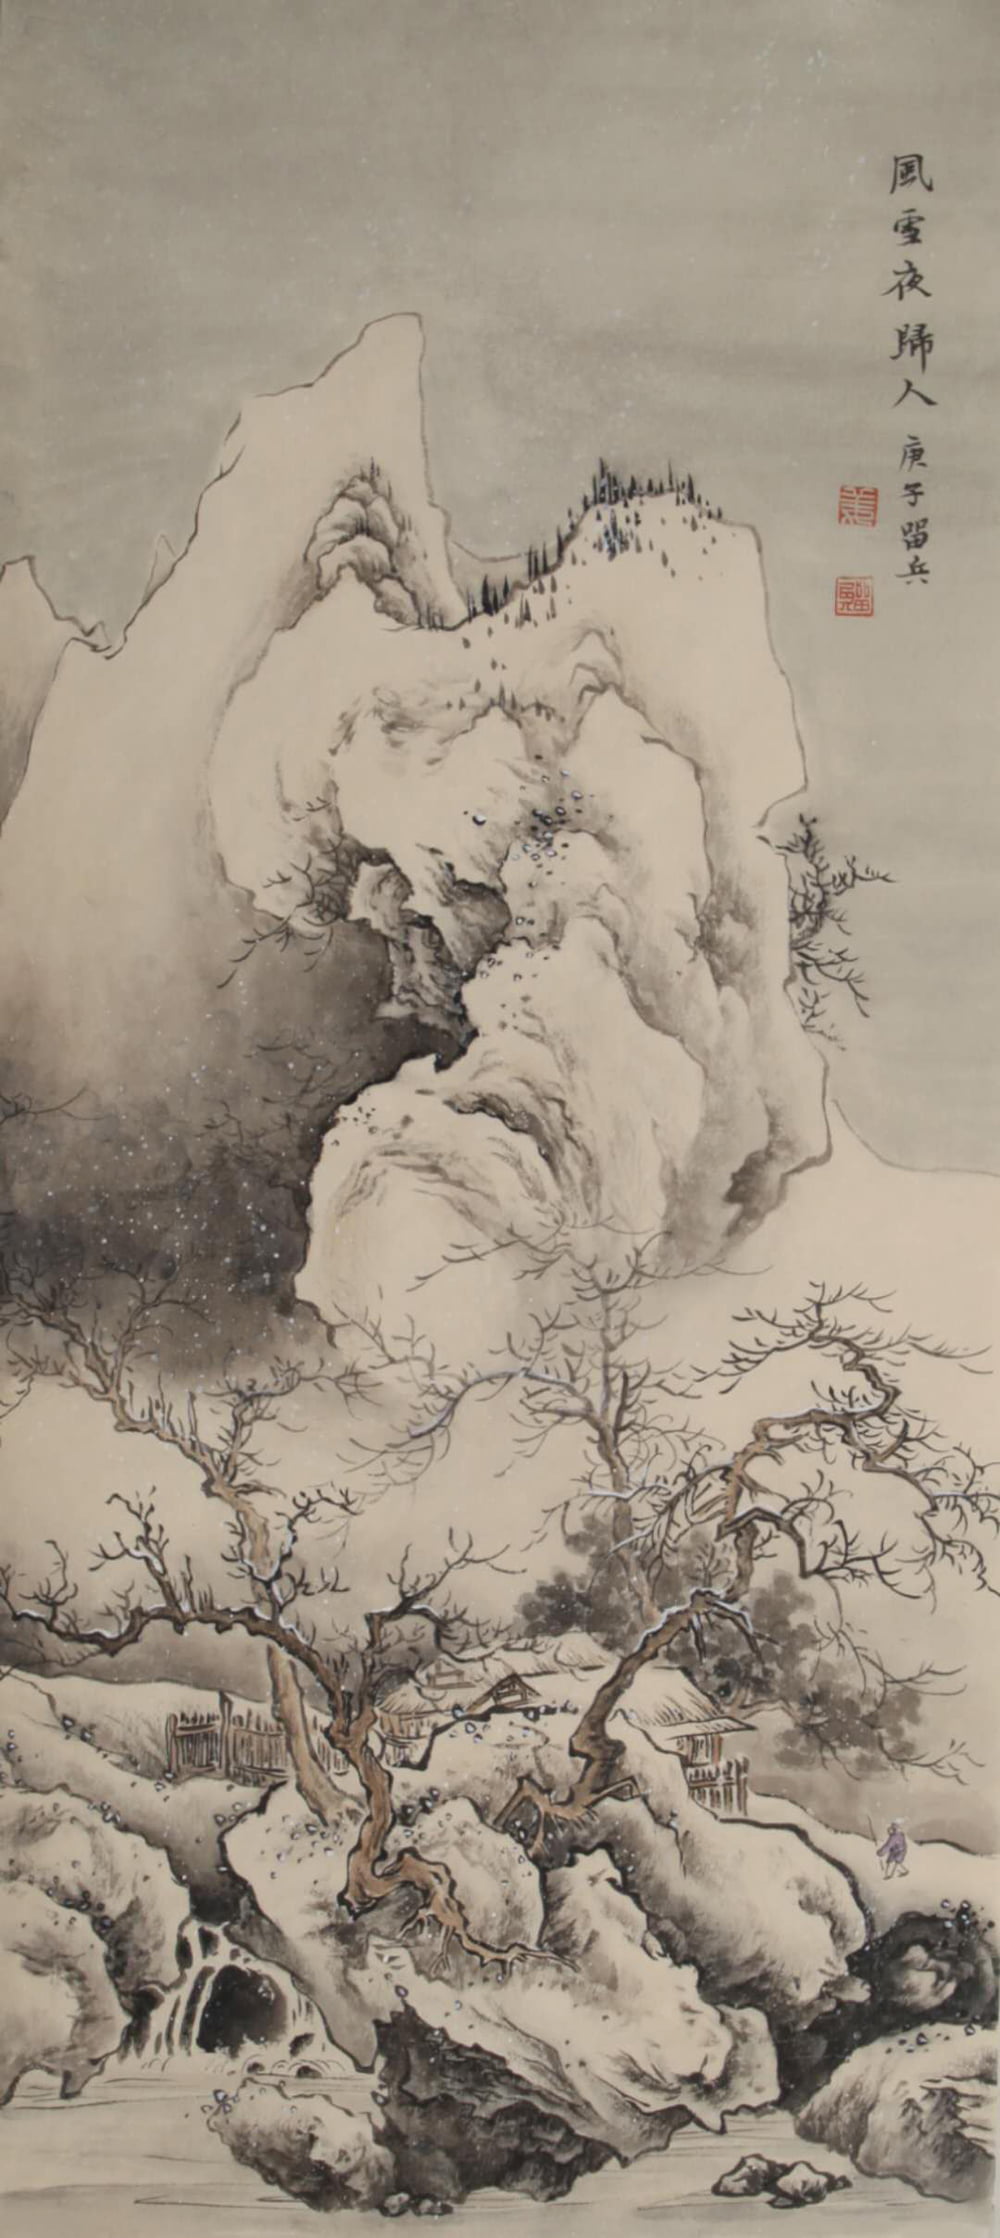 Return On A Snowy Night, Liubing Jiang - Exquisite Art